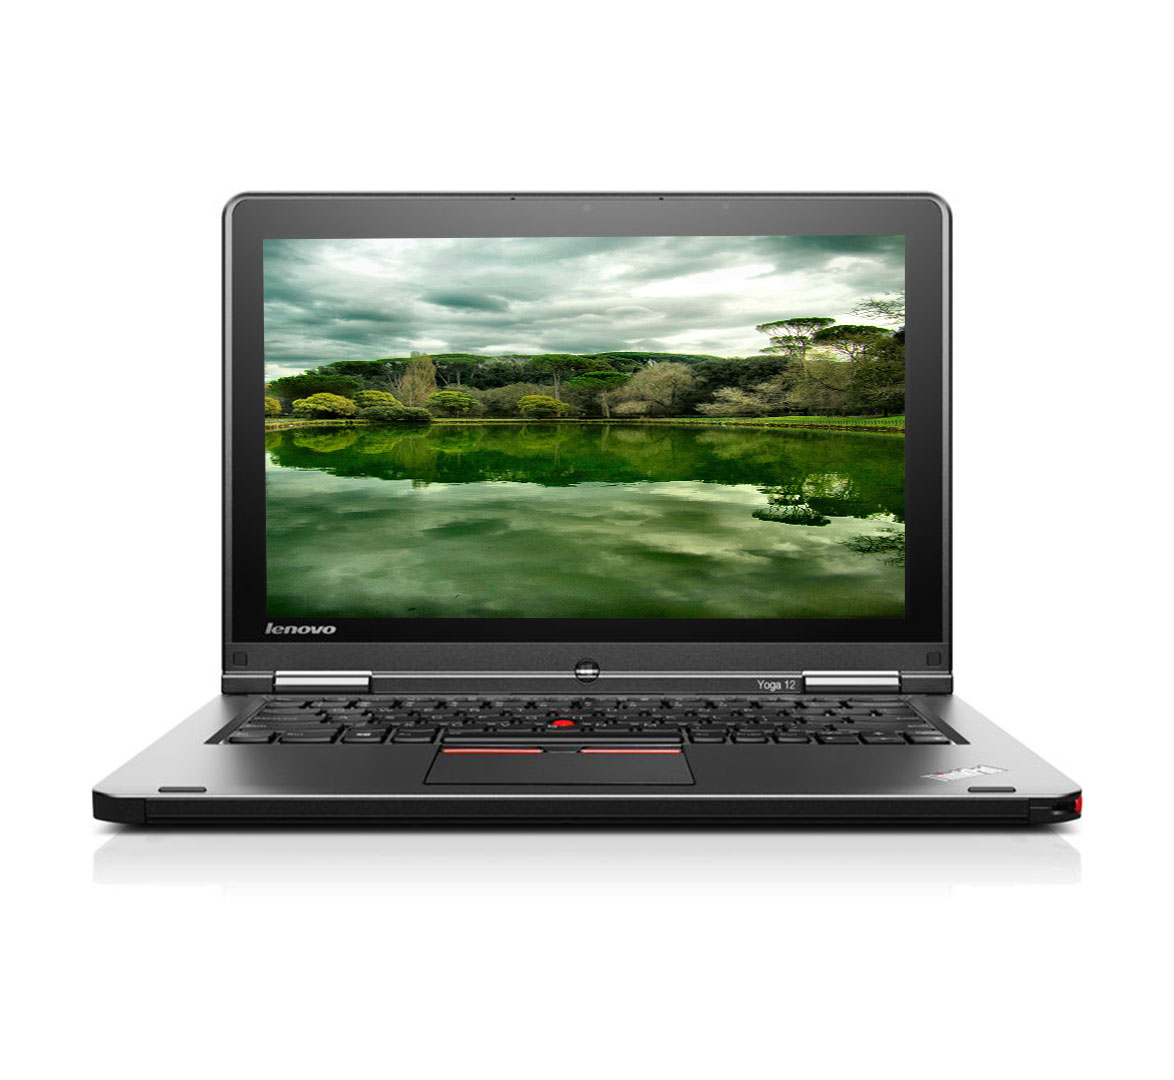 Lenovo ThinkPad S1 Yoga 12 Laptop, Intel Core i5-5th Gen. CPU, 8GB RAM, 500GB HDD+16GB SSD , 12.5 inch Touchscreen 360°, Windows 10